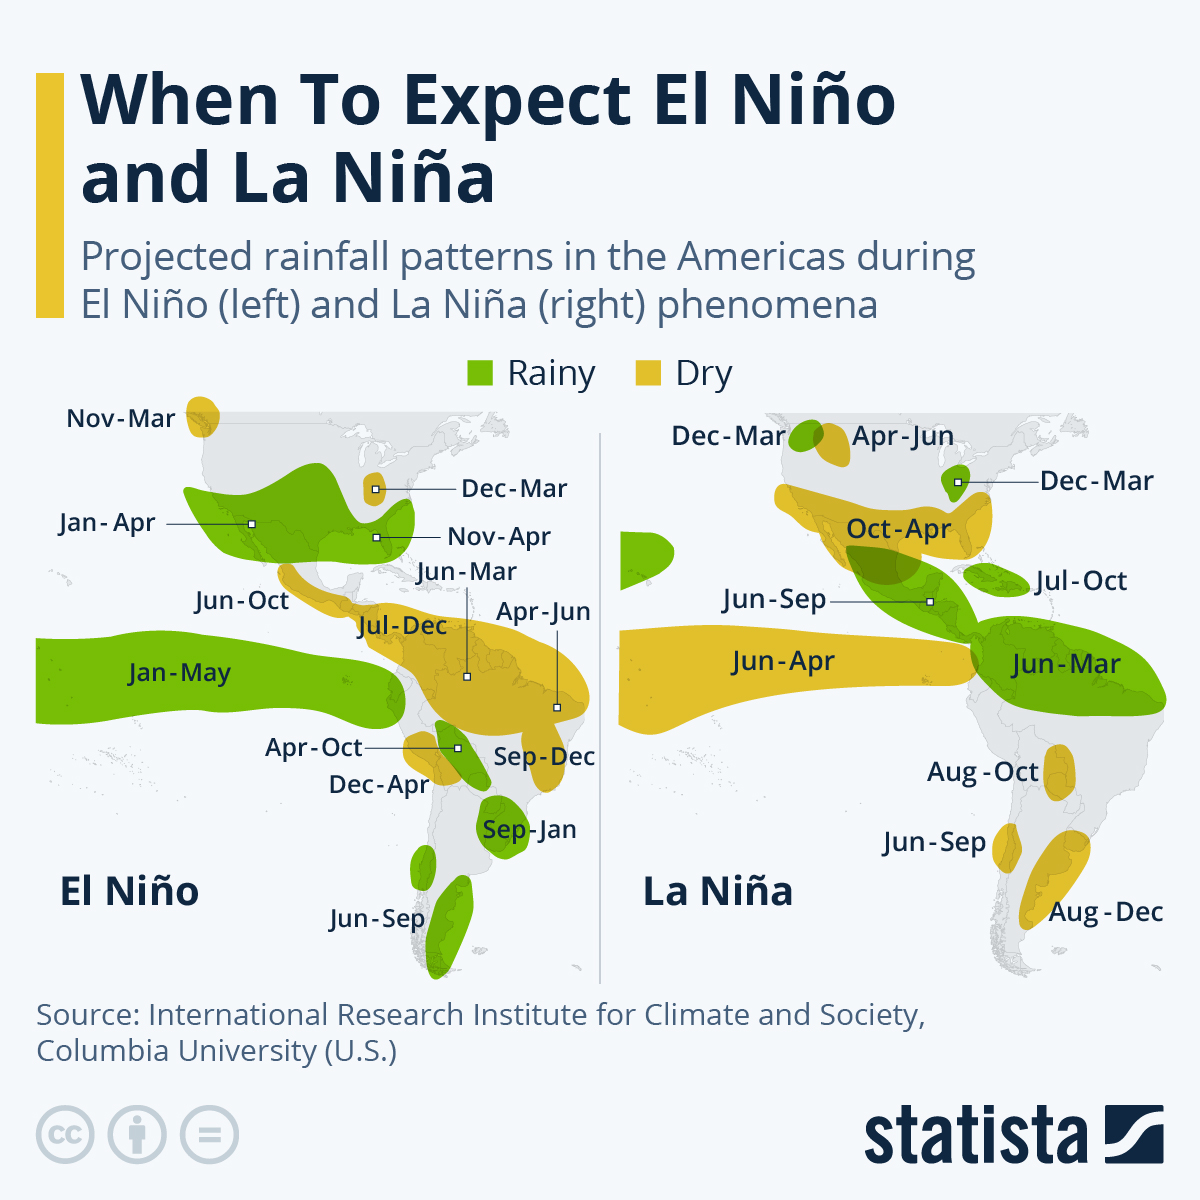 When Can You Expect El Niño and La Nina?